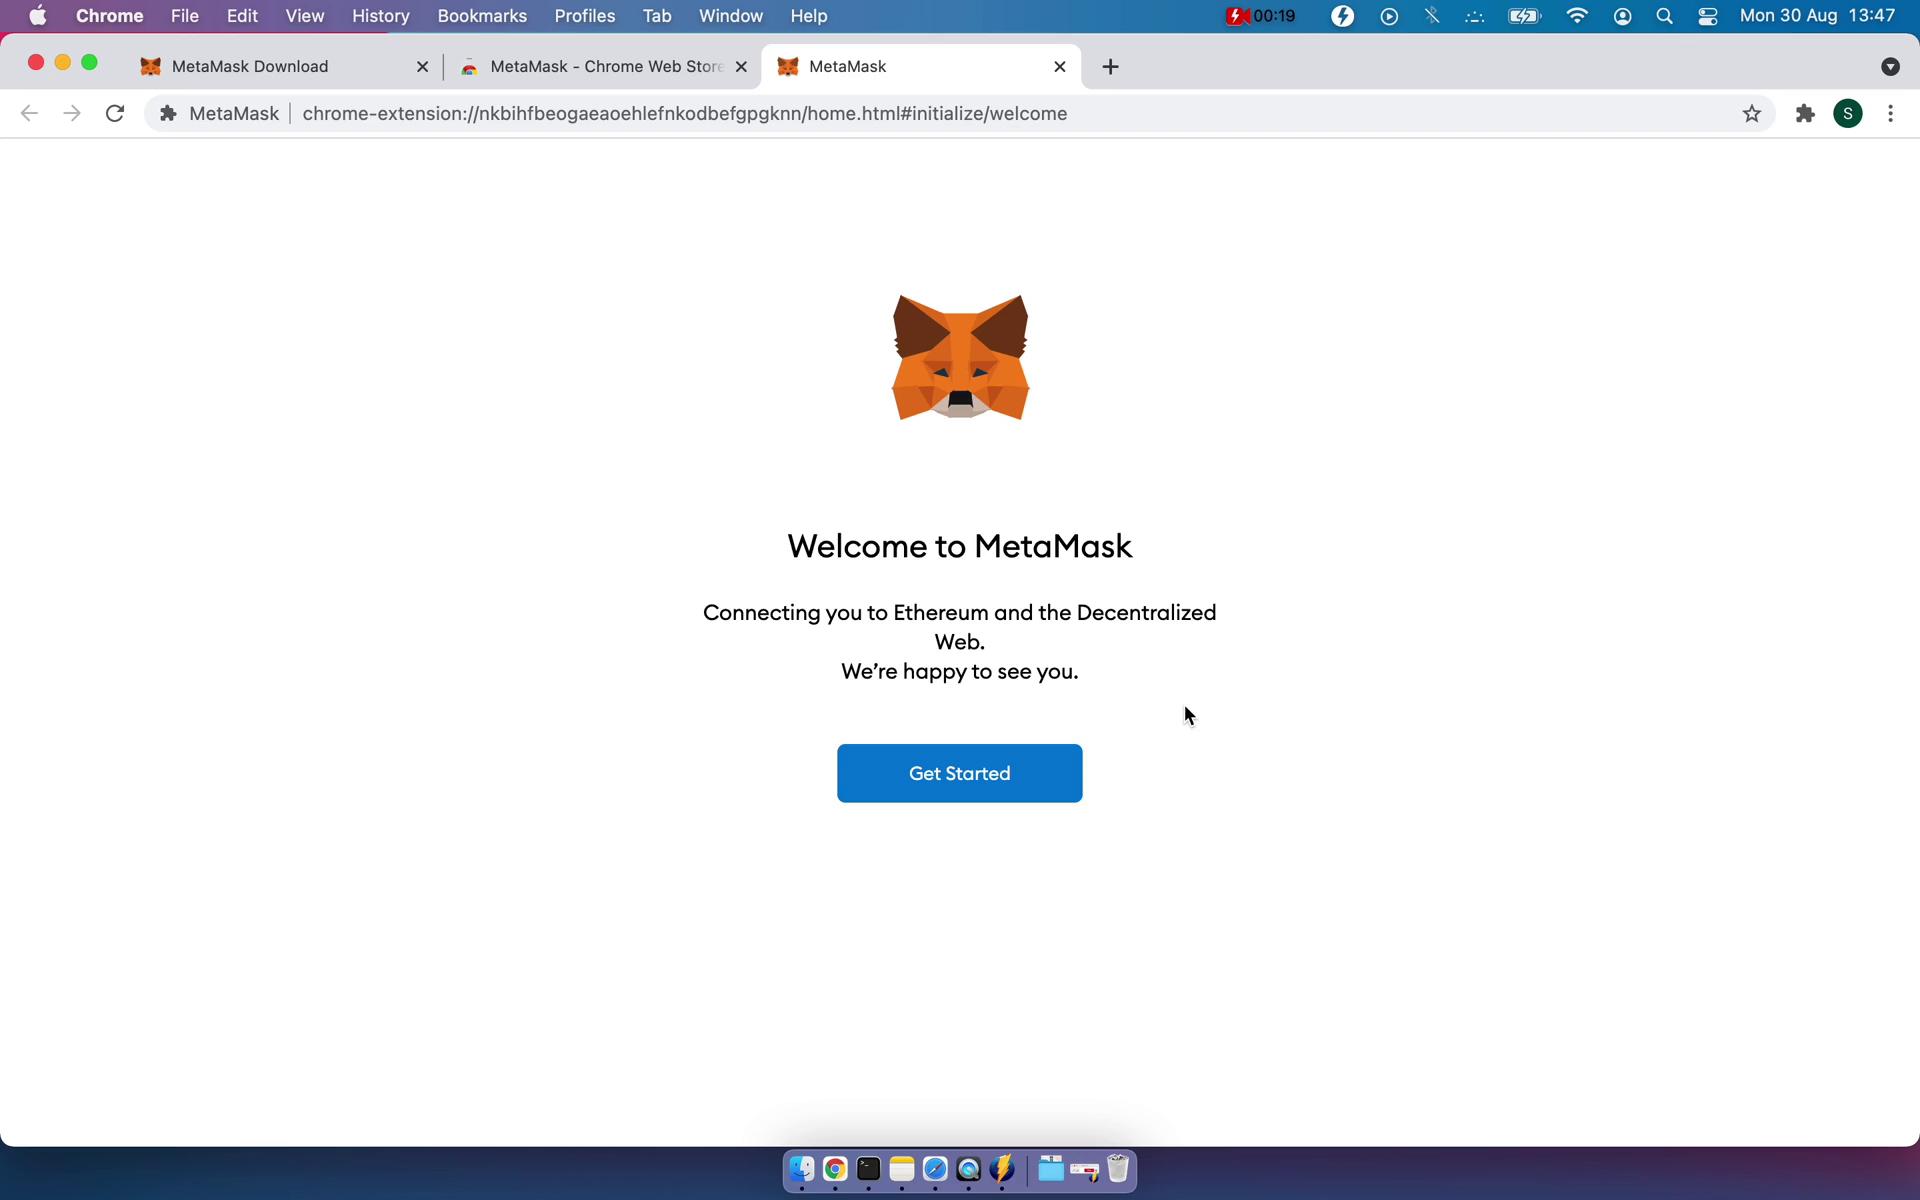 MetaMask welcome screenshot